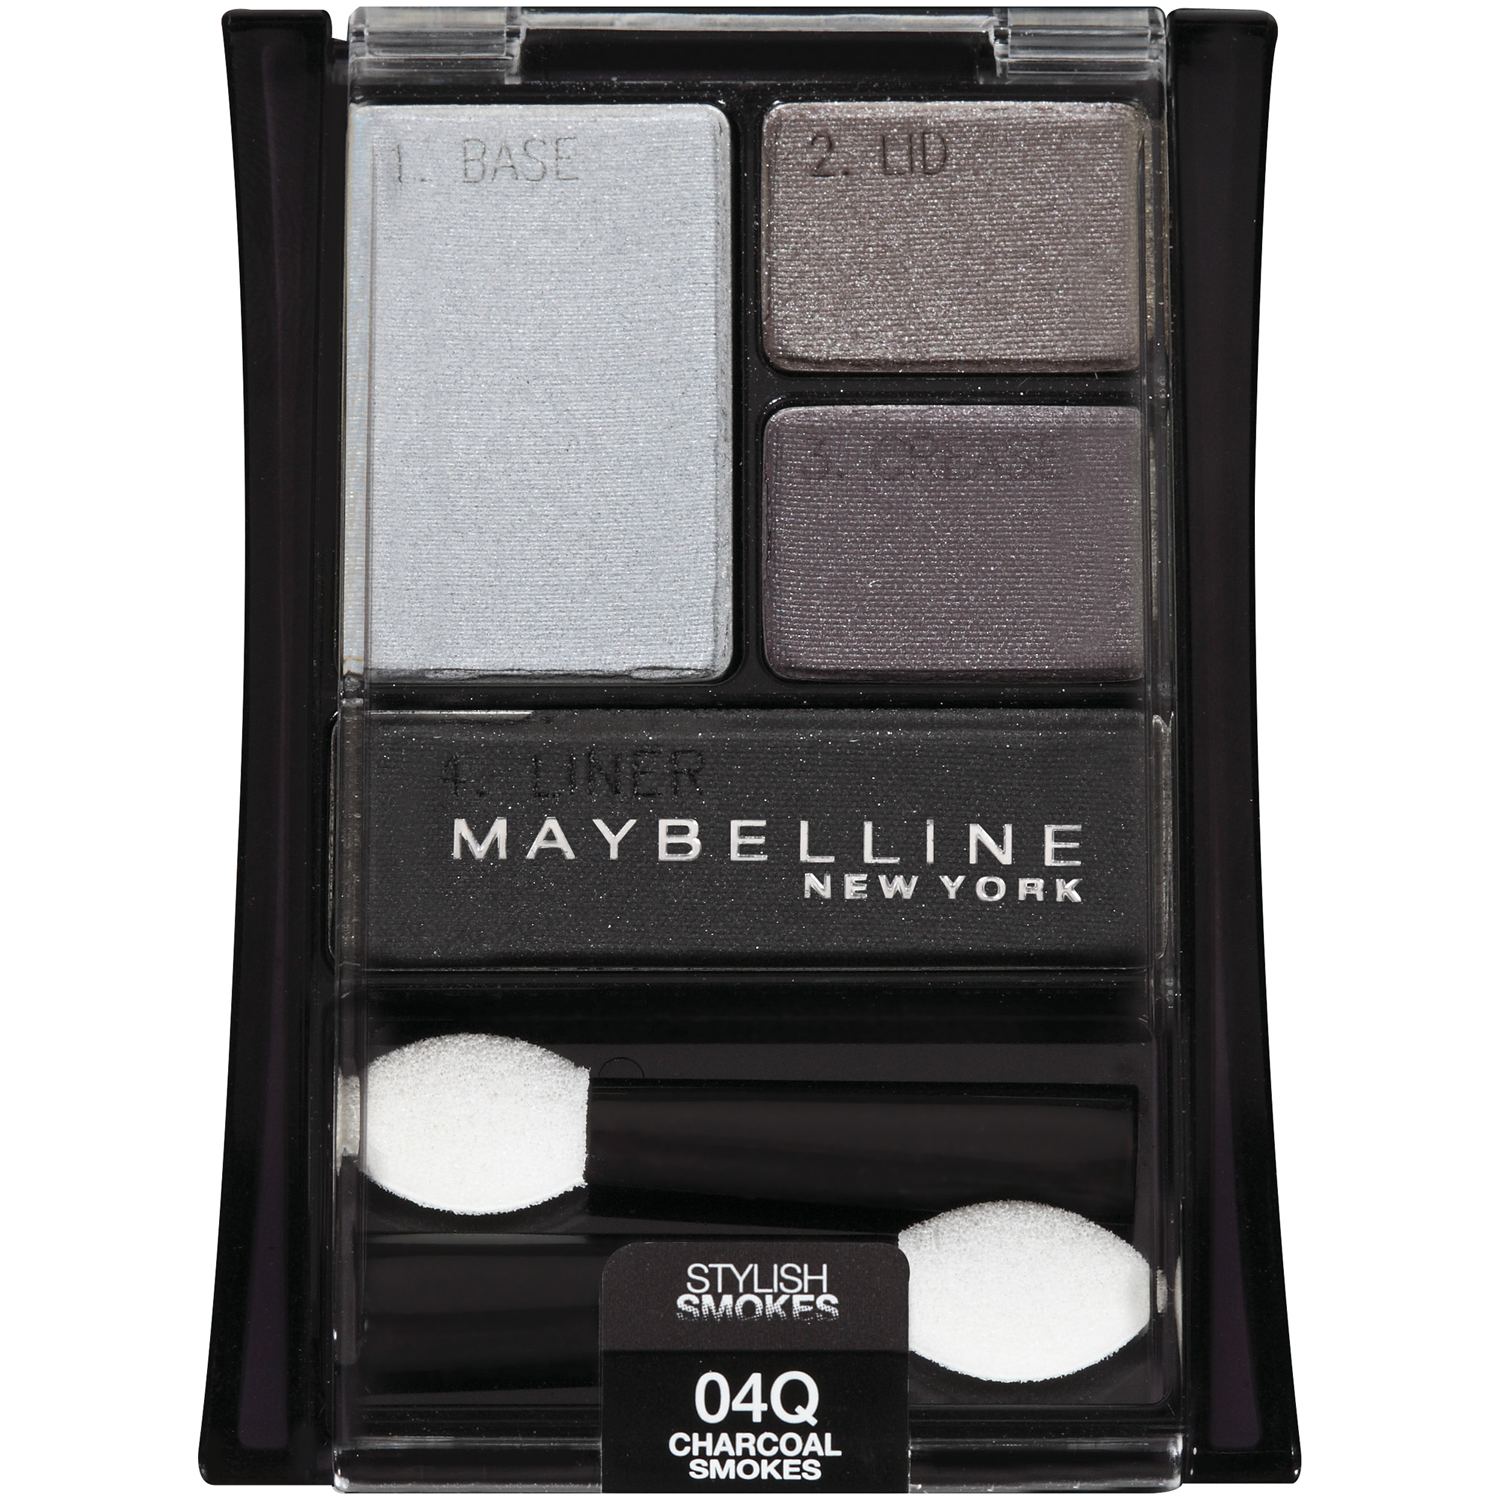 Maybelline New York Expert Wear Stylish Smokes Eyeshadow, Charcoal Smokes 04, 0.17 oz (4.8 g)